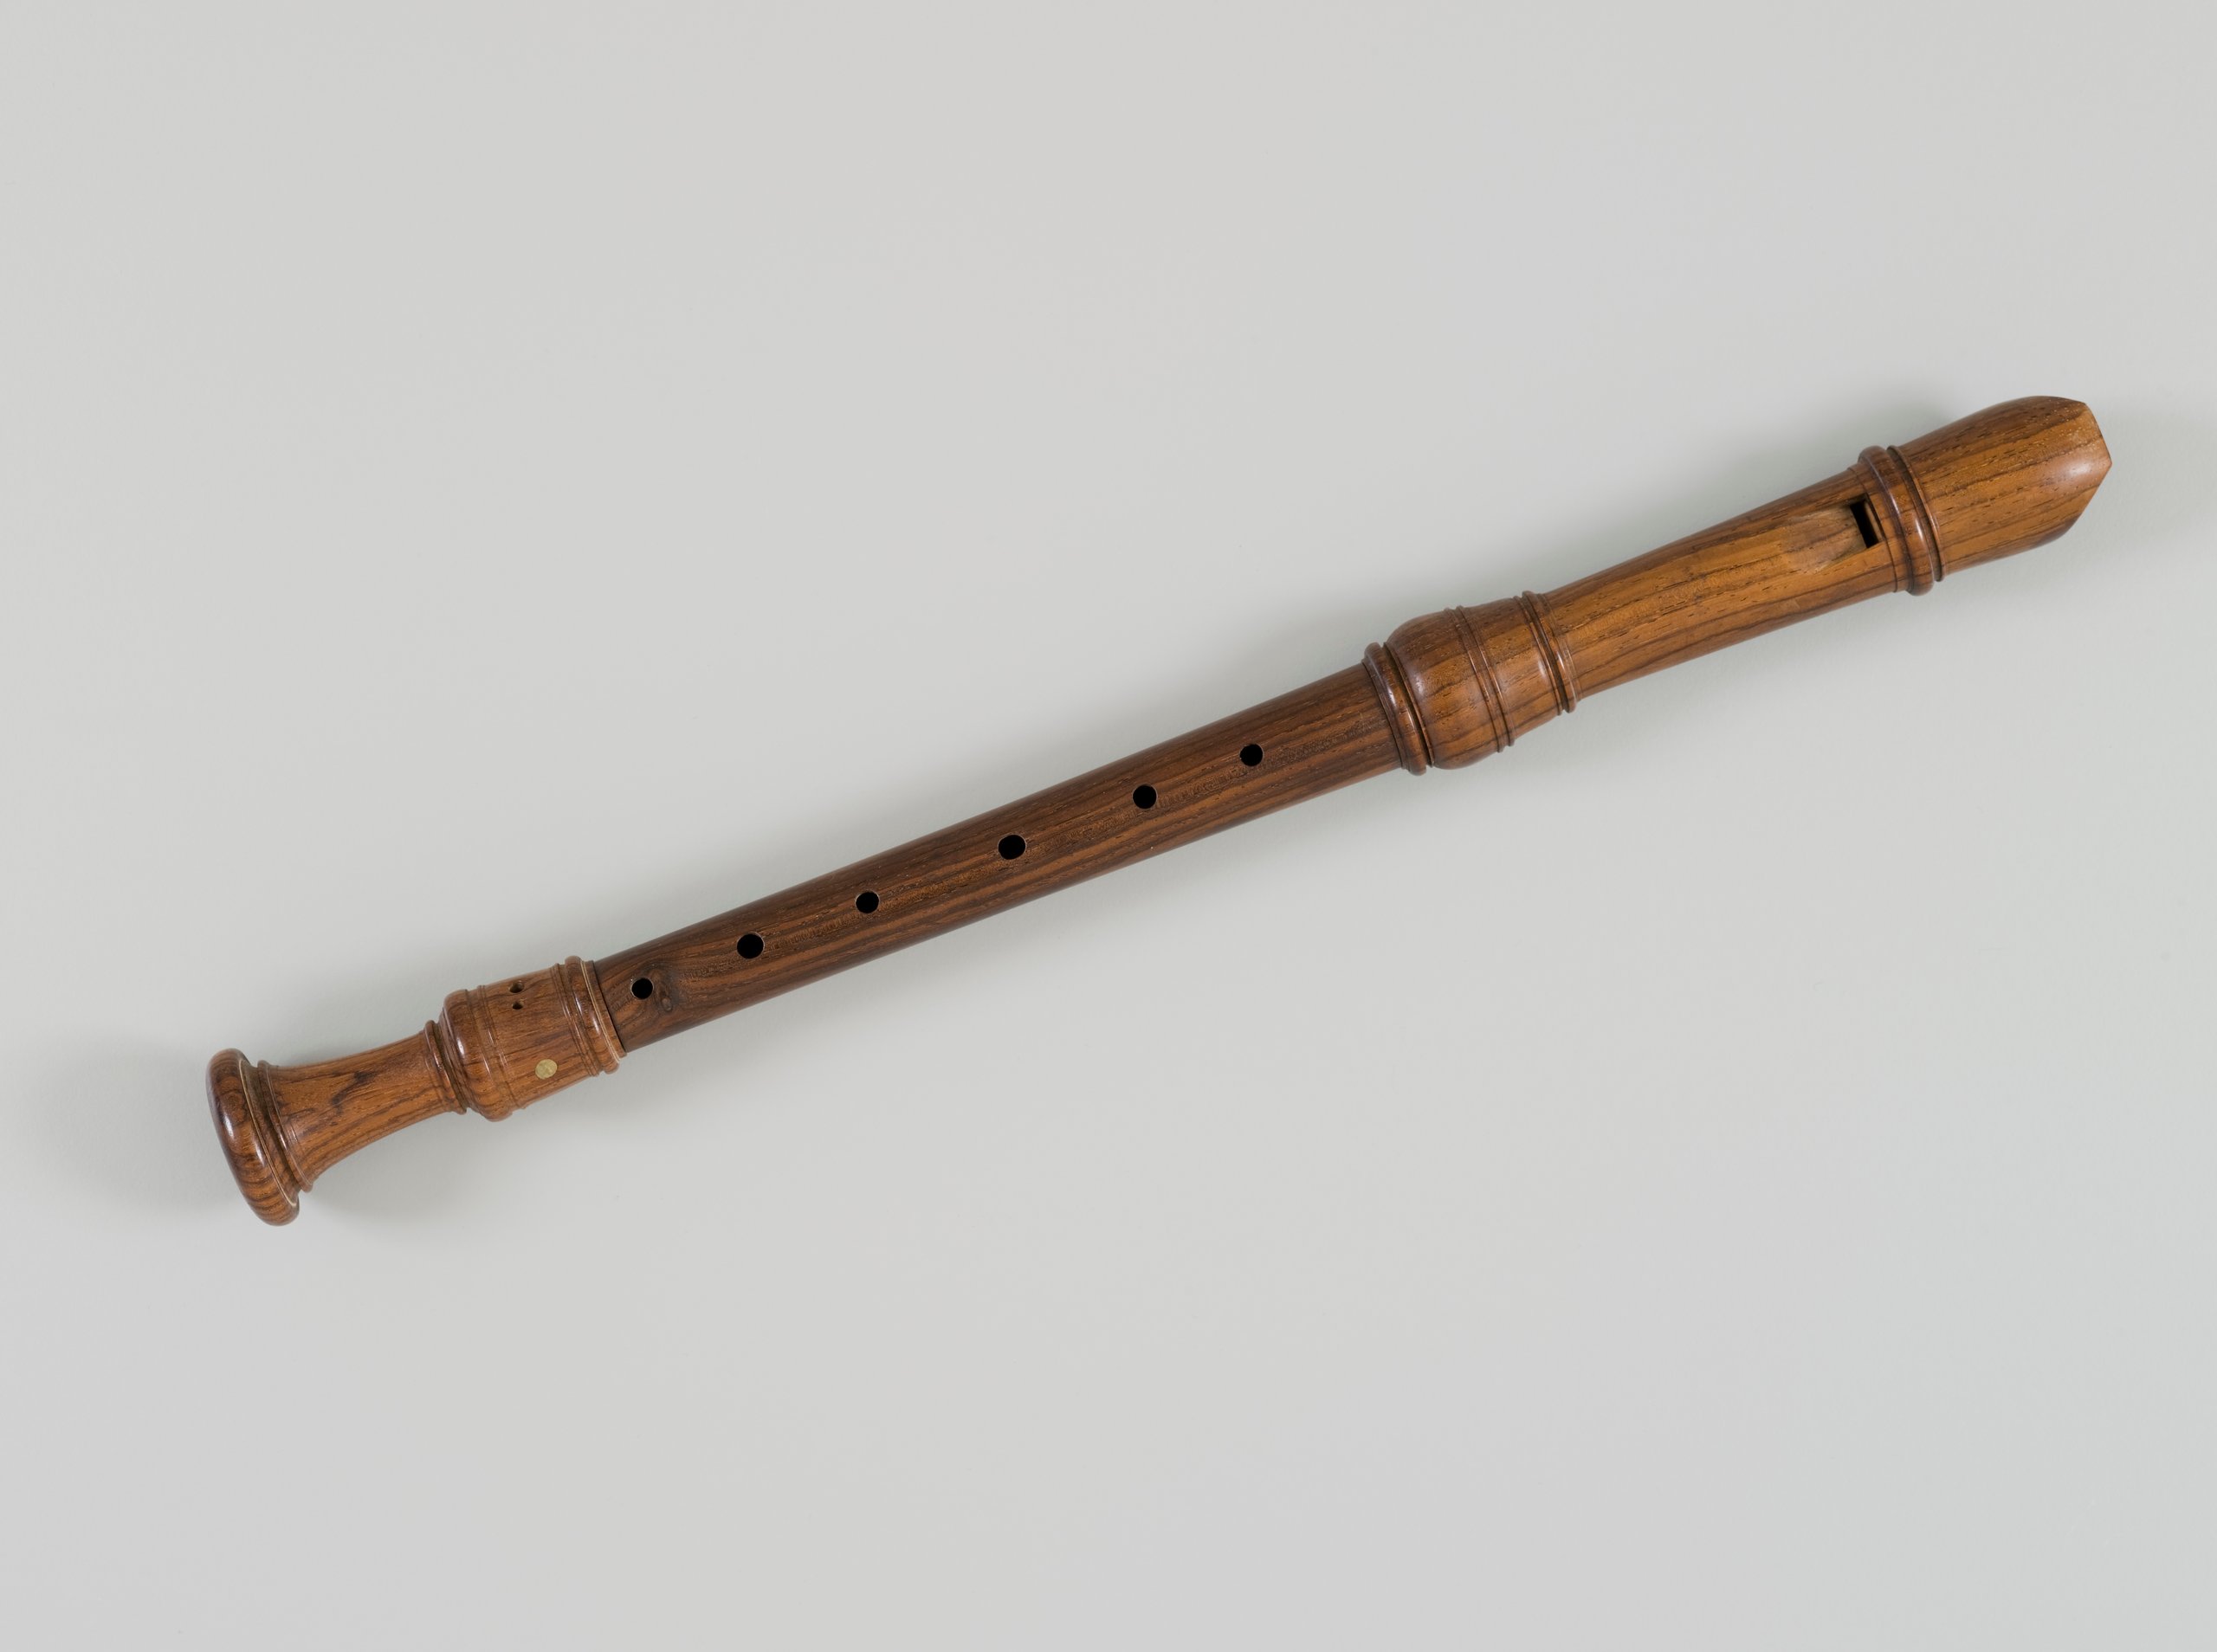 Treble (alto) recorder made by Fred Morgan